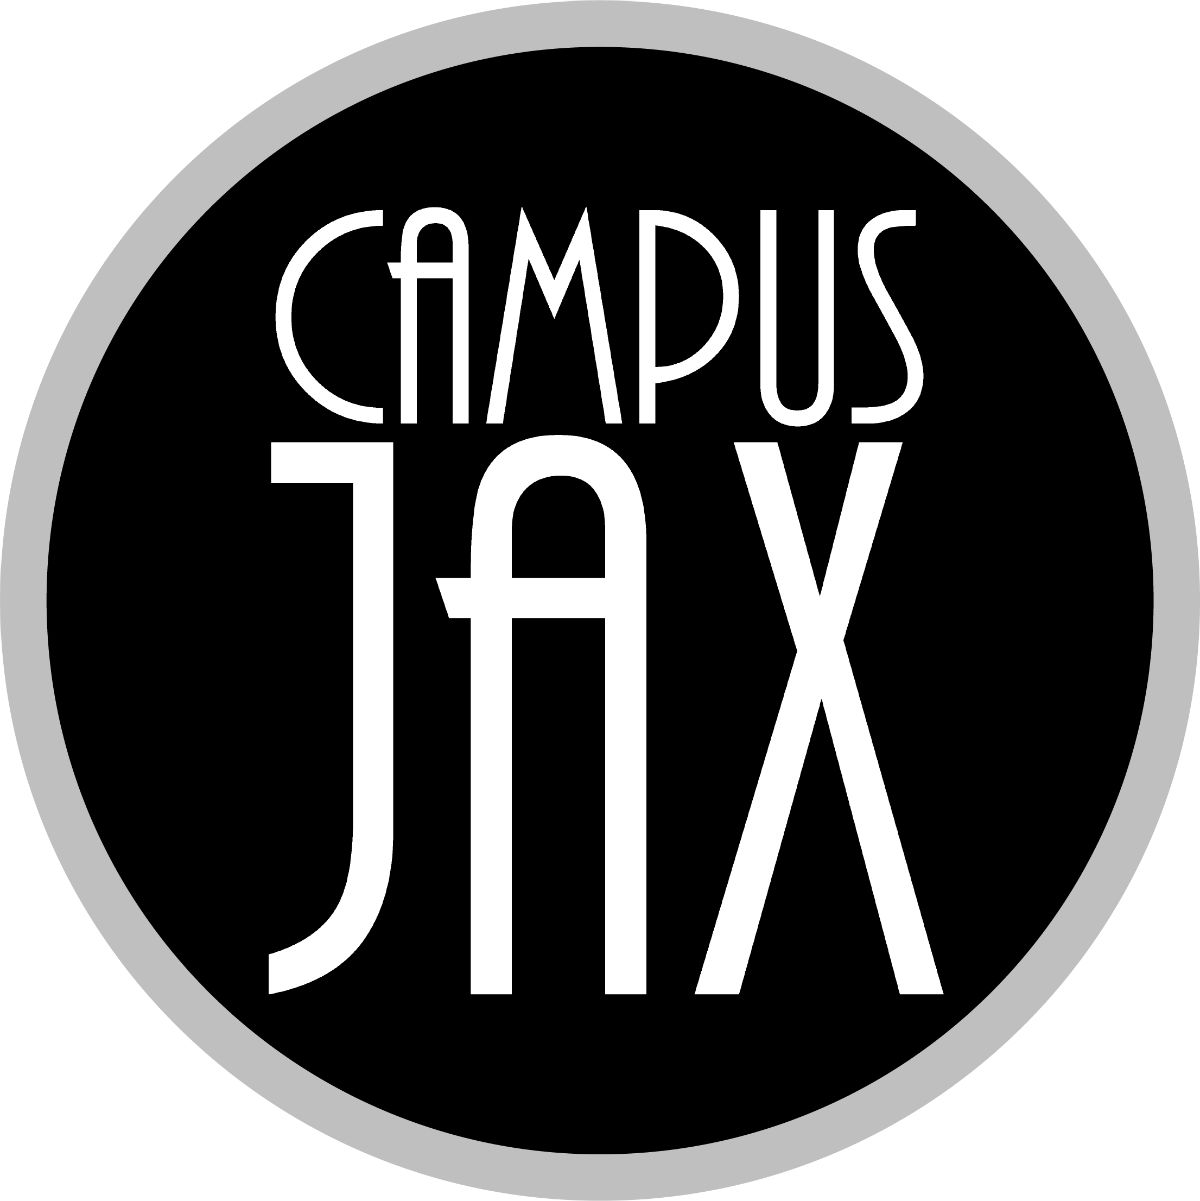 Campus JAX Logo